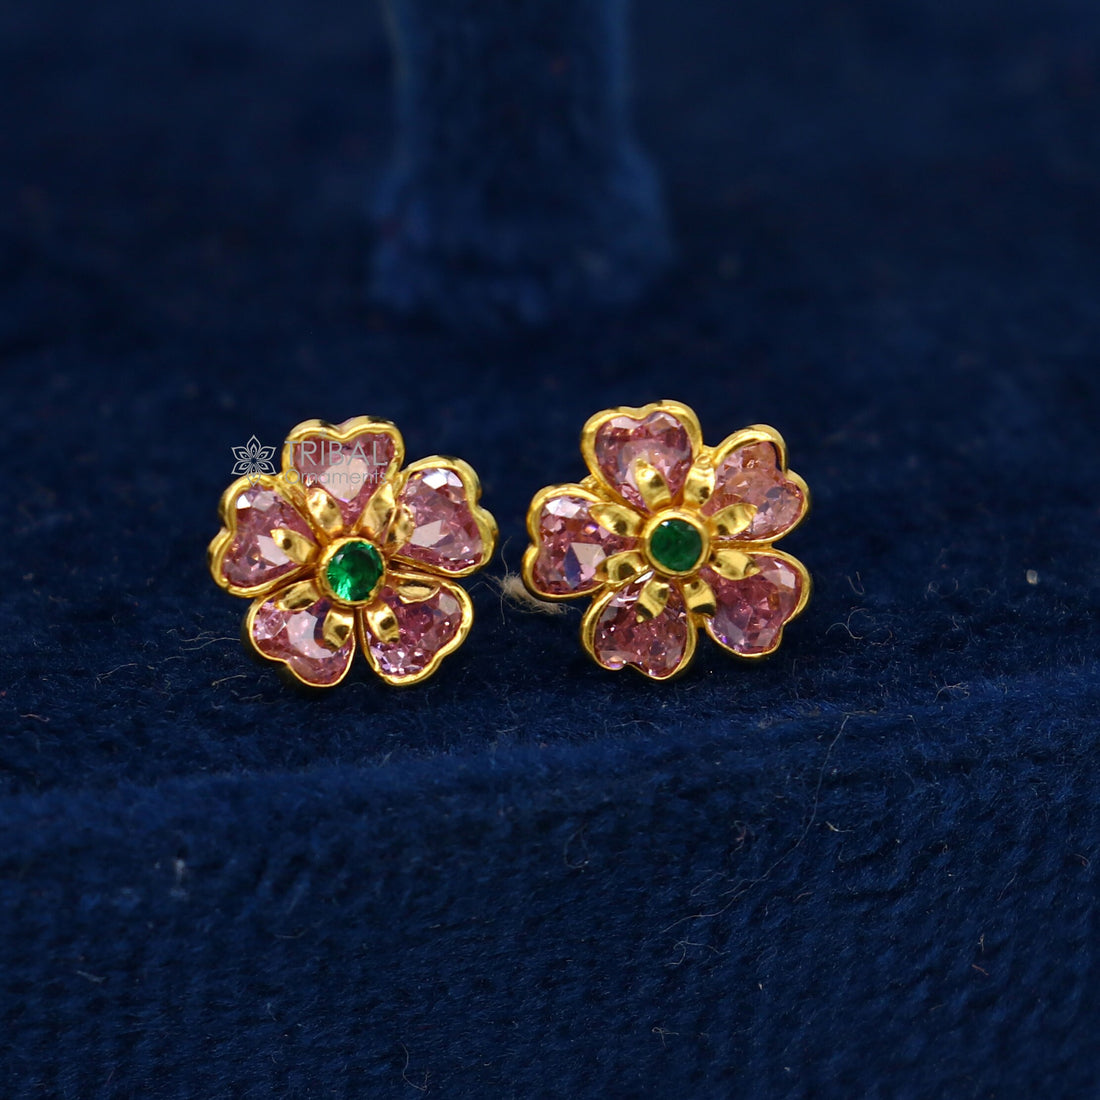 14kt yellow gold handmade fabulous orange Stone excellent vintage flower design stud earrings pair unisex jewelry er175 - TRIBAL ORNAMENTS